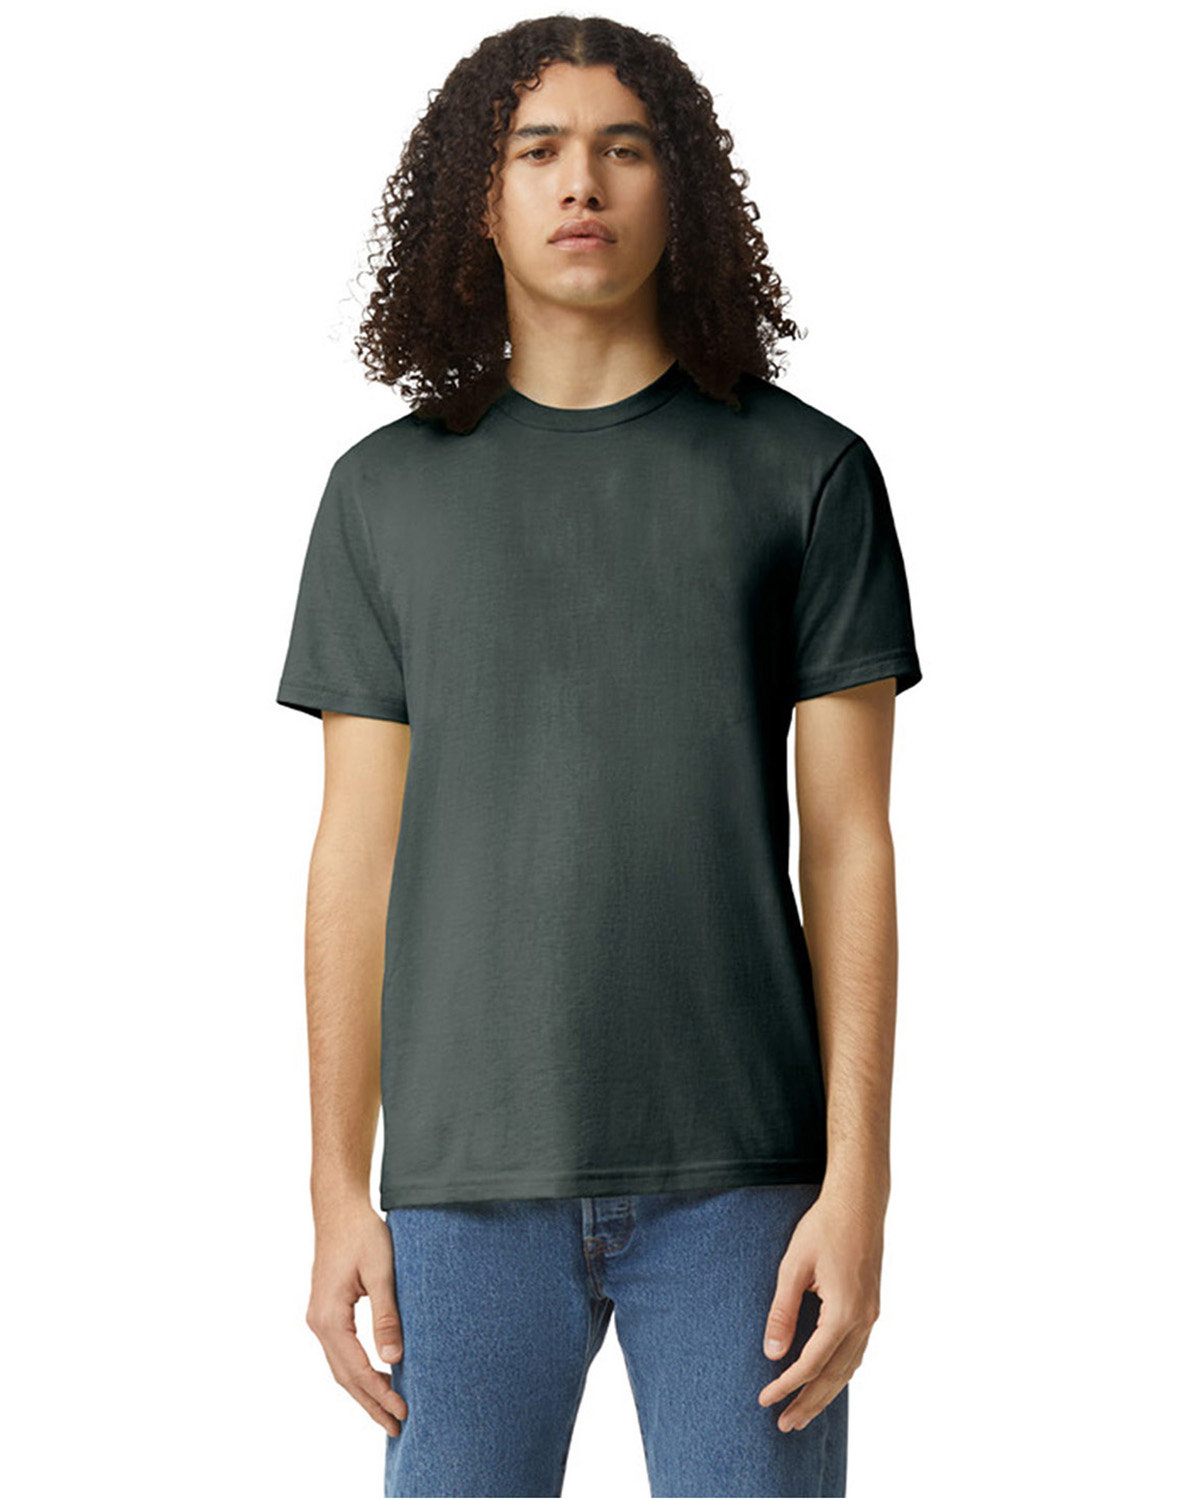 American Apparel Unisex CVC T-Shirt HEATHER CHARCOAL 